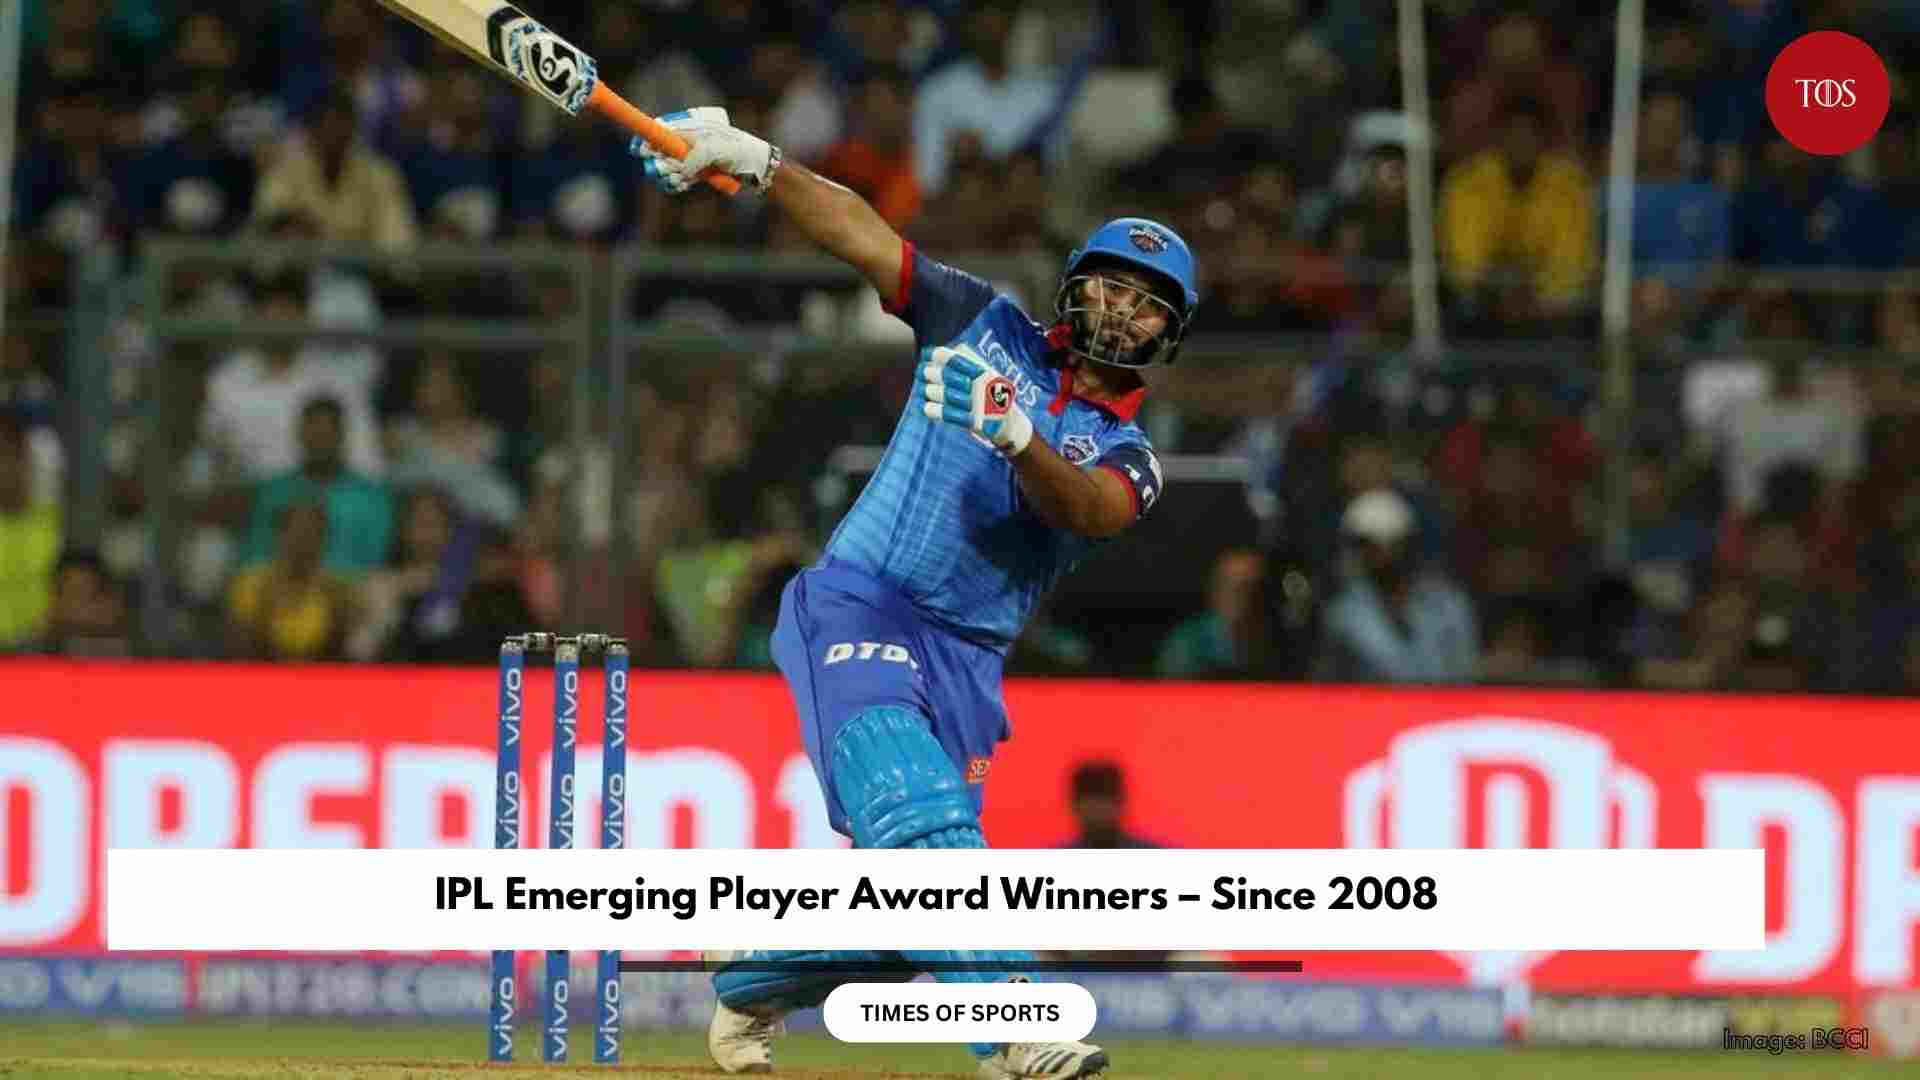 IPL Emerging Player Award Winners